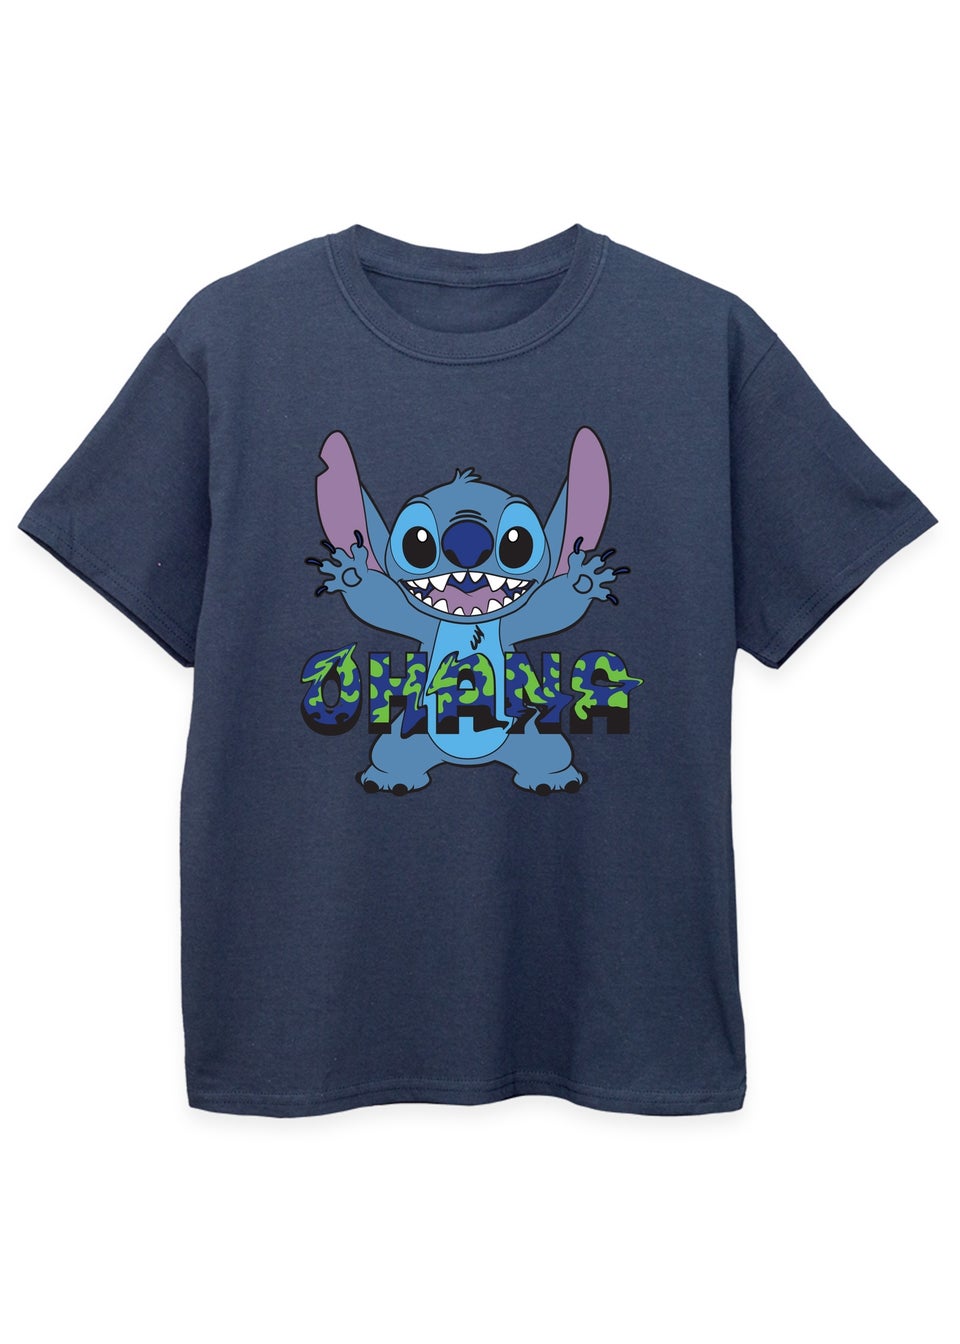 Disney Kids Navy Lilo & Stitch Ohana Blue Glitch Printed T-Shirt (3-13 yrs)